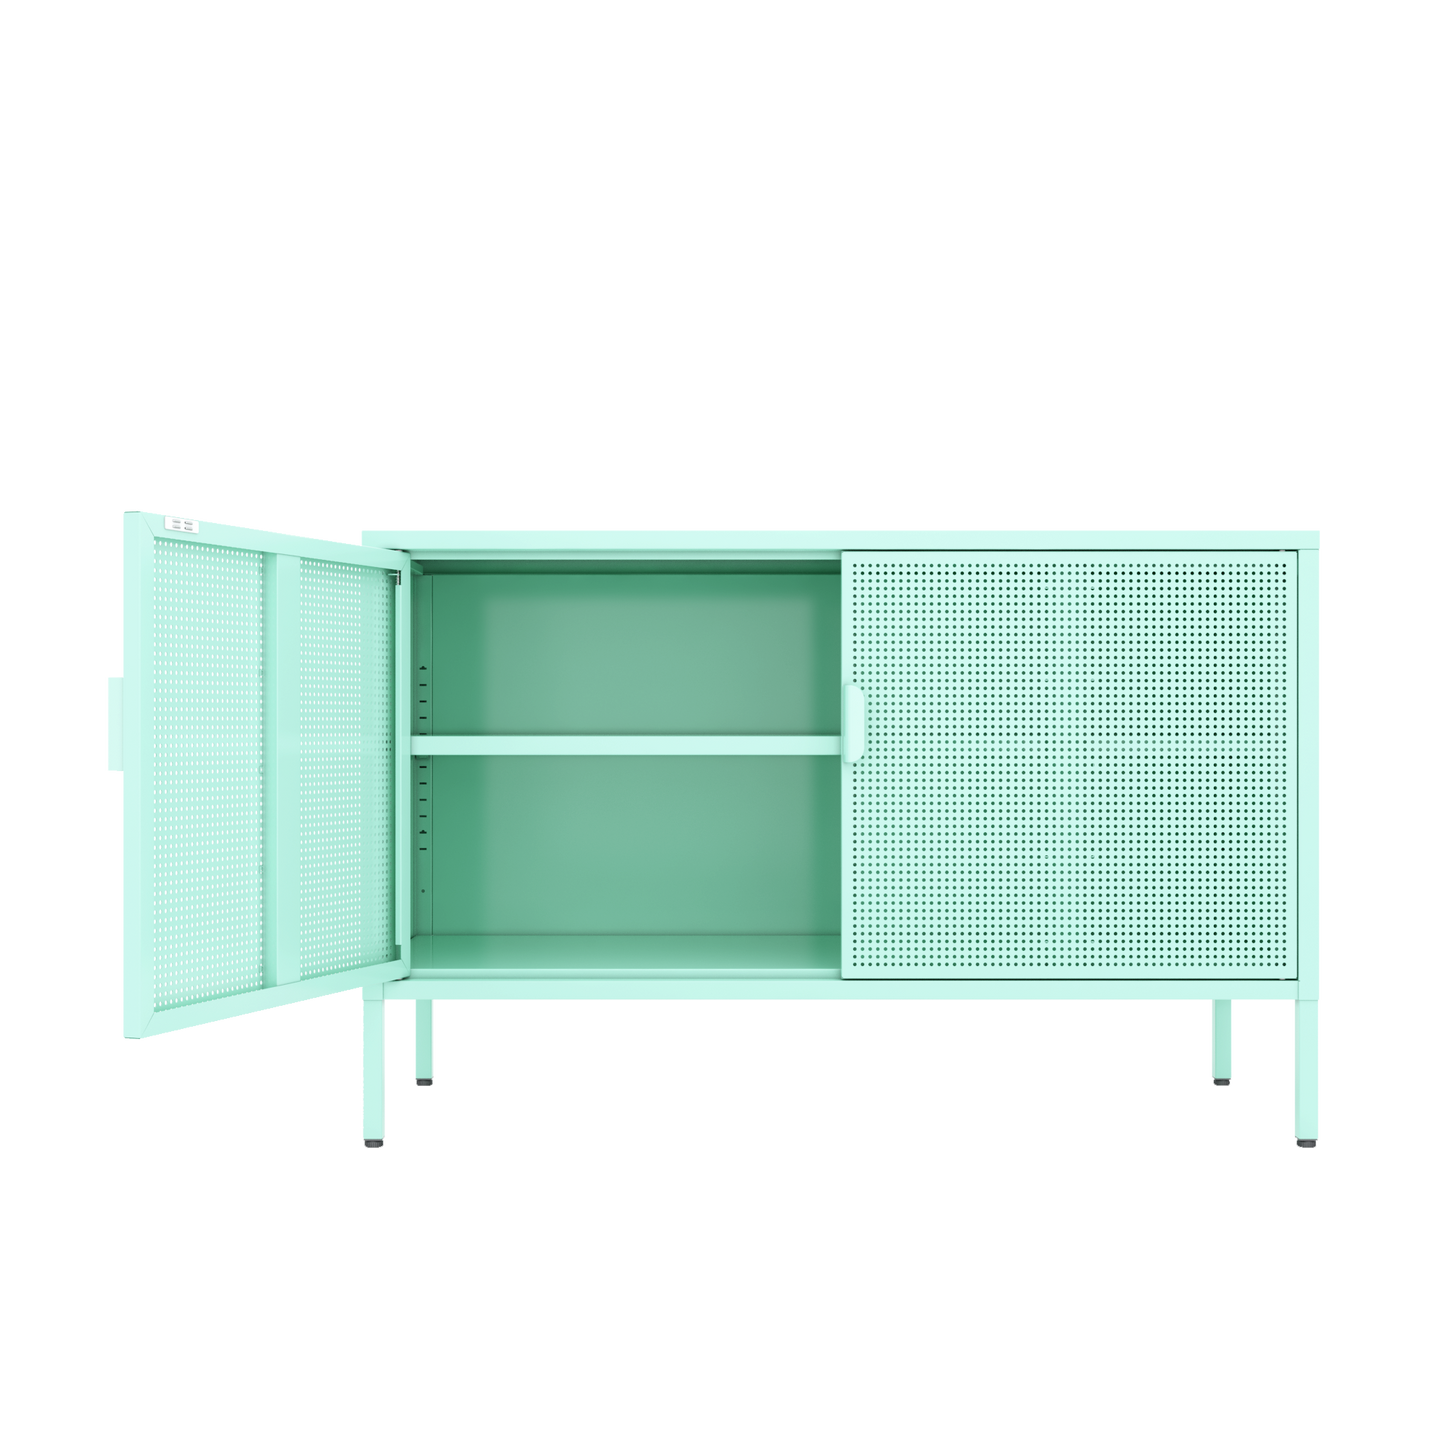 Metal Storage Locker Cabinet, Adjustable Shelves Free Standing Sideboard Steel Cabinets for Office, Home